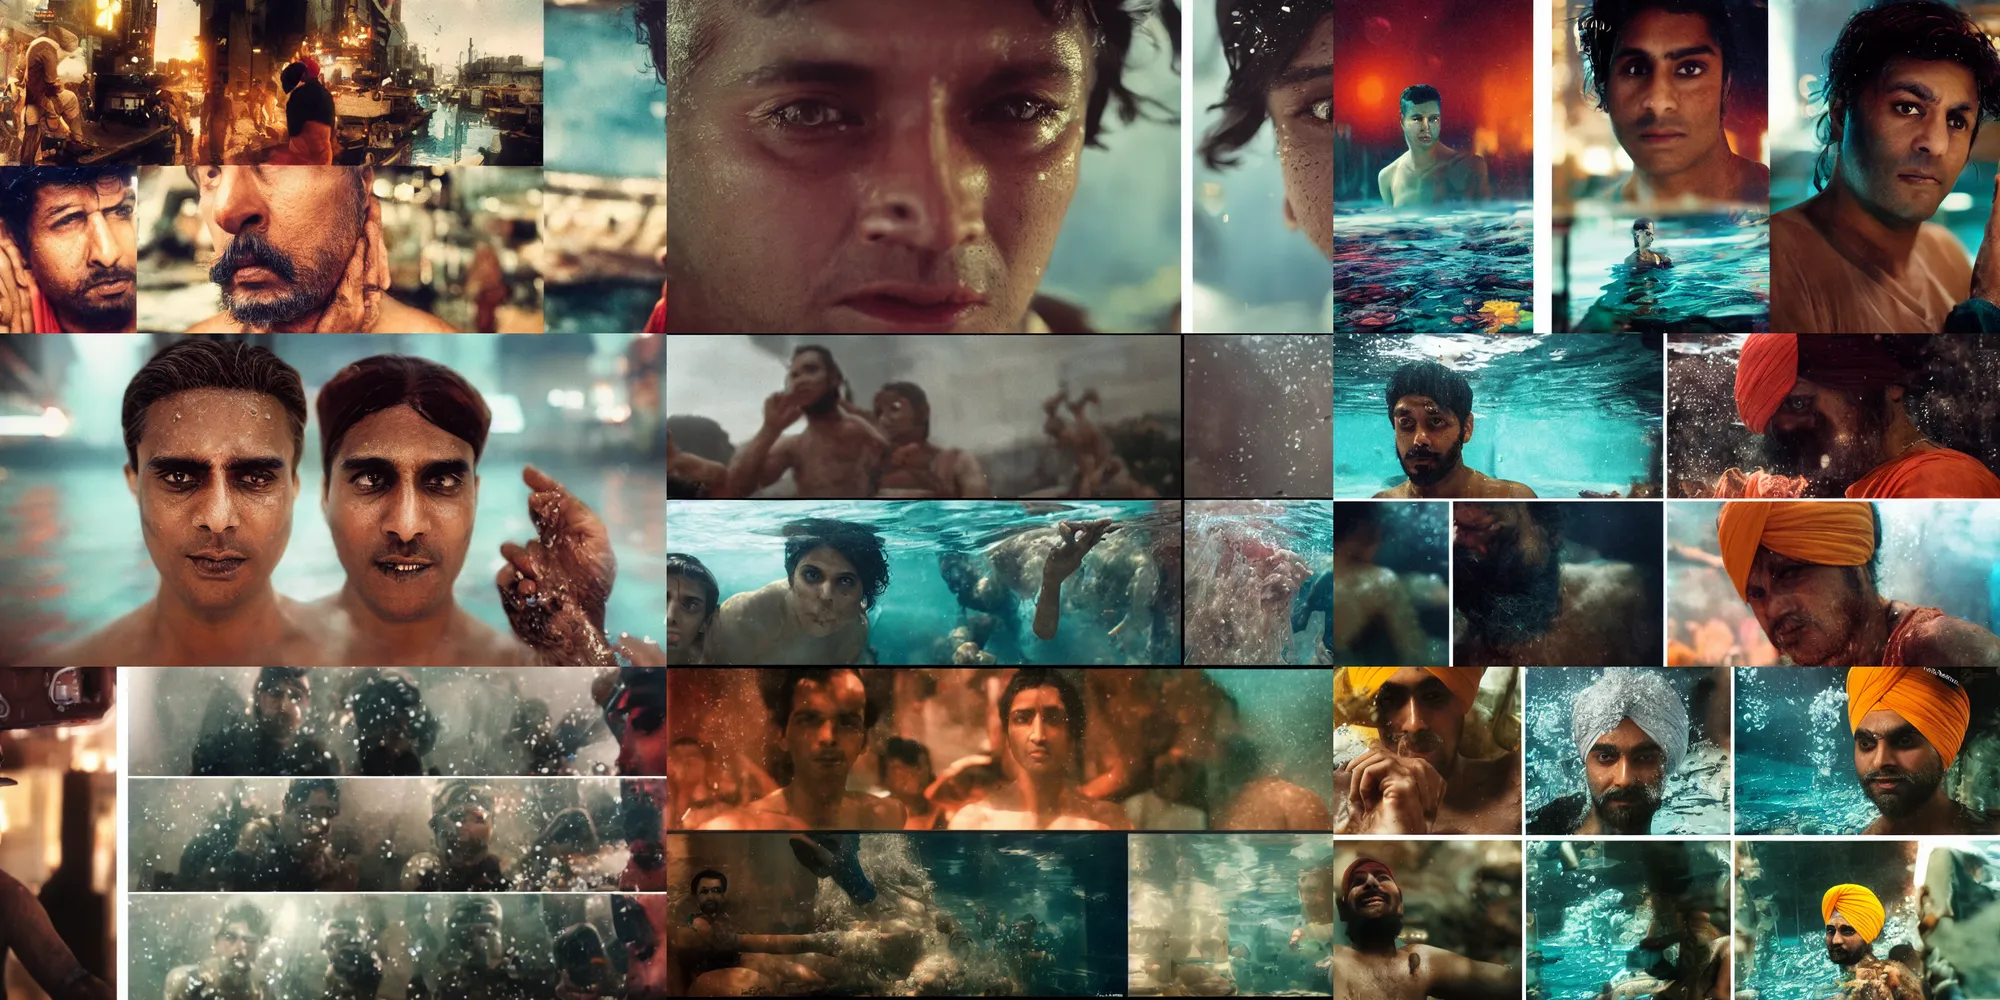 Prompt: Kodak portra 160, 4K, split screen, closeup portrait: famous indian sikh in low budget blade runner movie remake, underwater scene